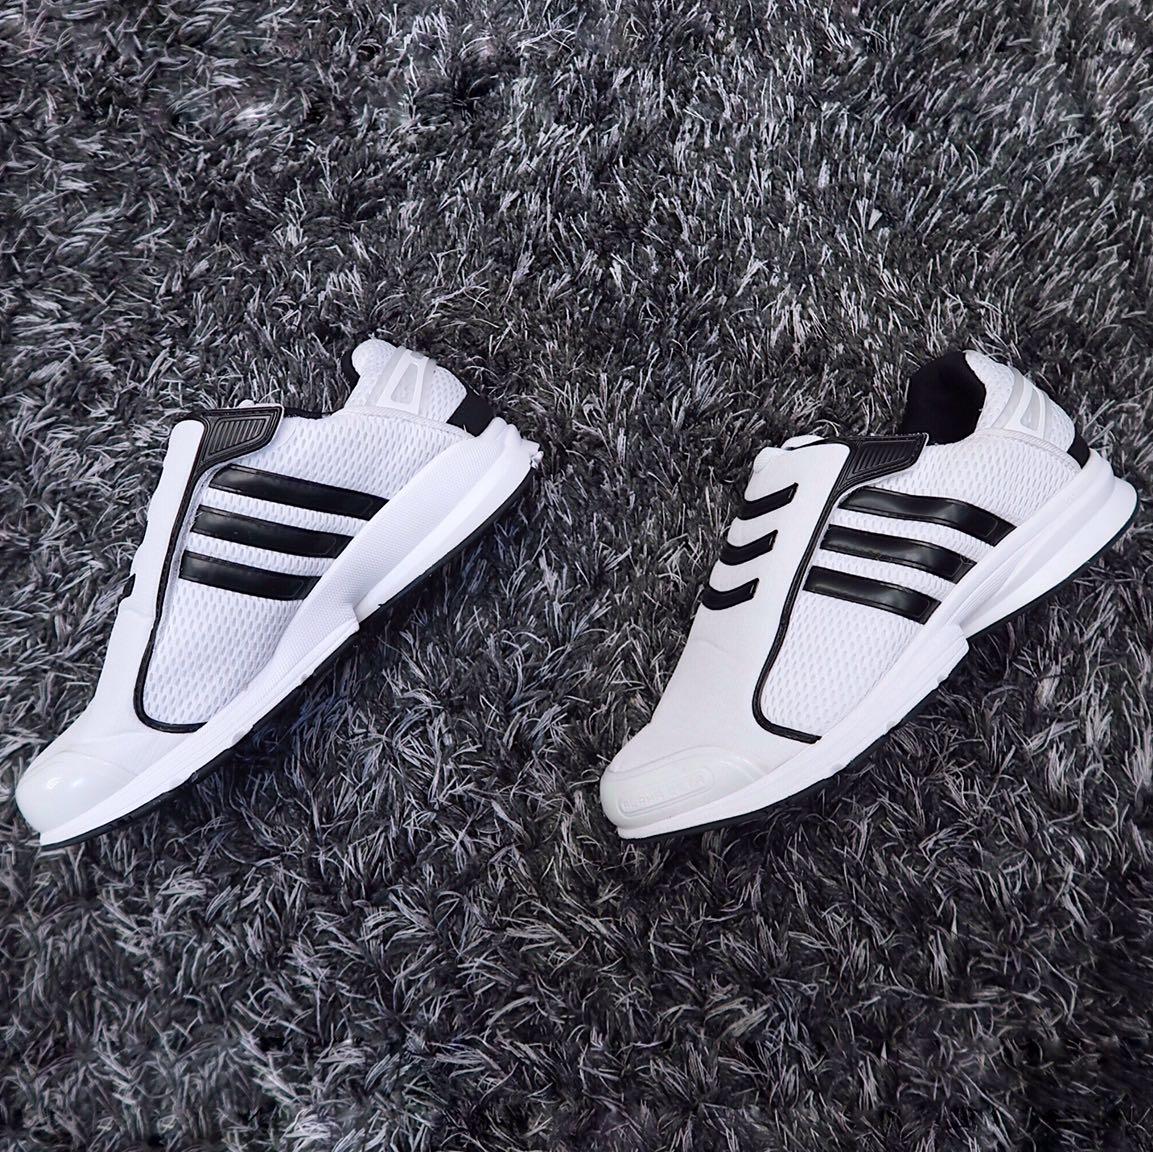 Adidas White Running Shoes (Alpha Zeta 